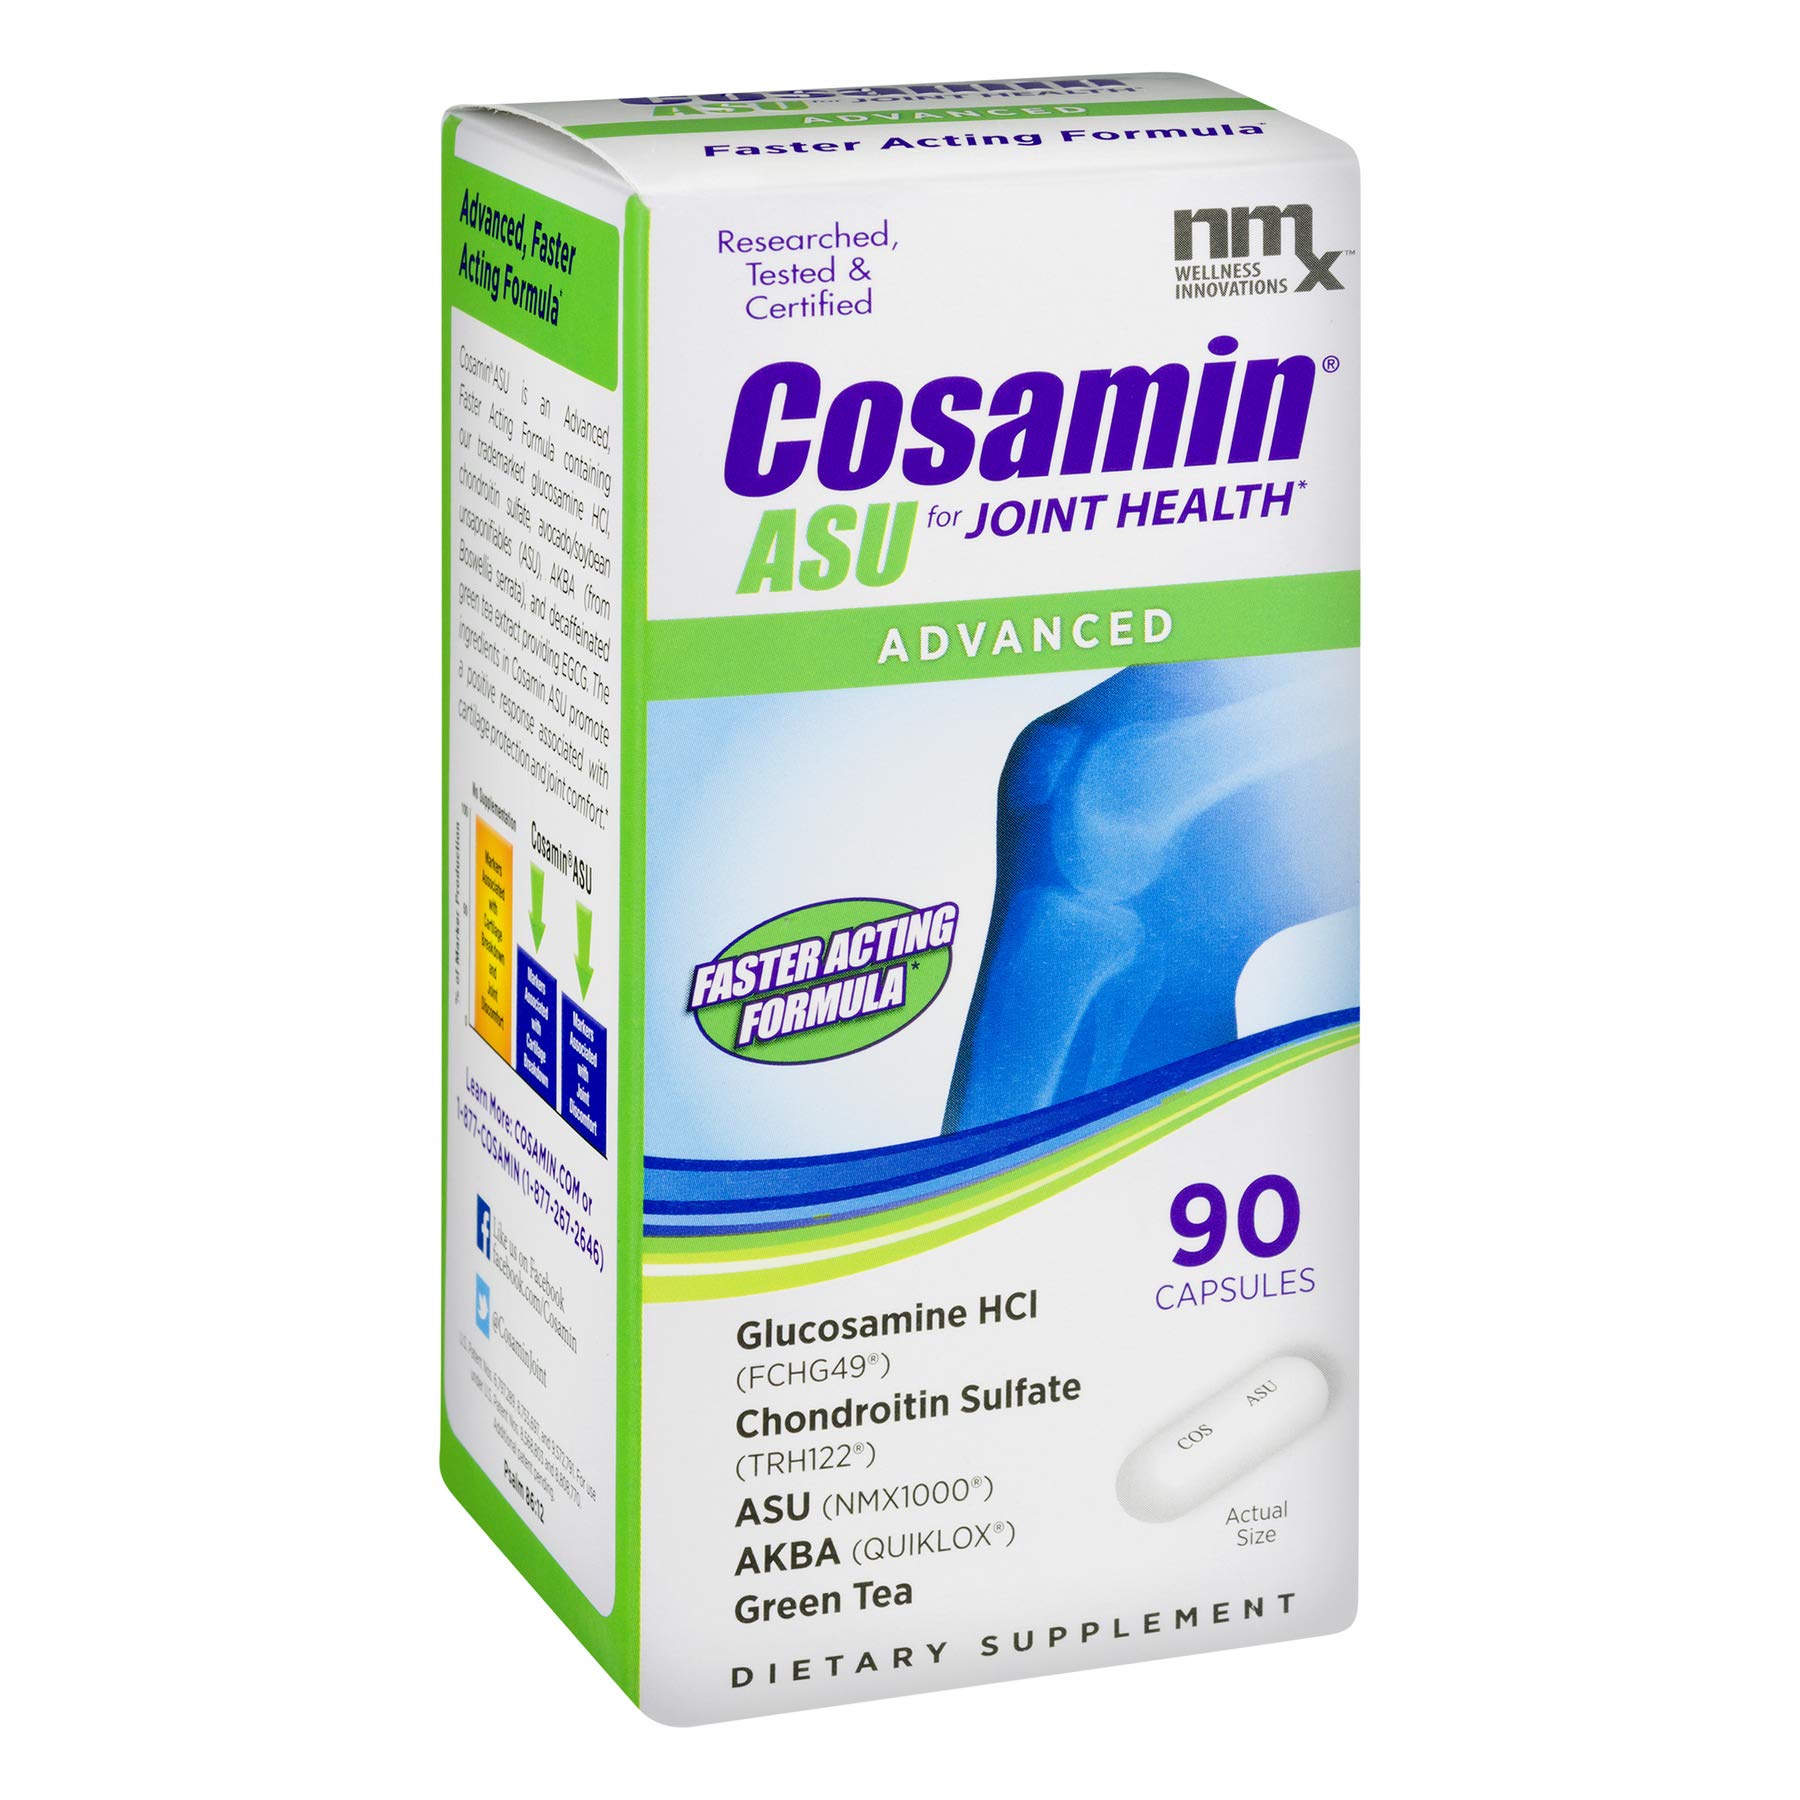 Cosamin Nutramax Cosamin ASU Joint Health Capsules - 90 ct, Pack of 2